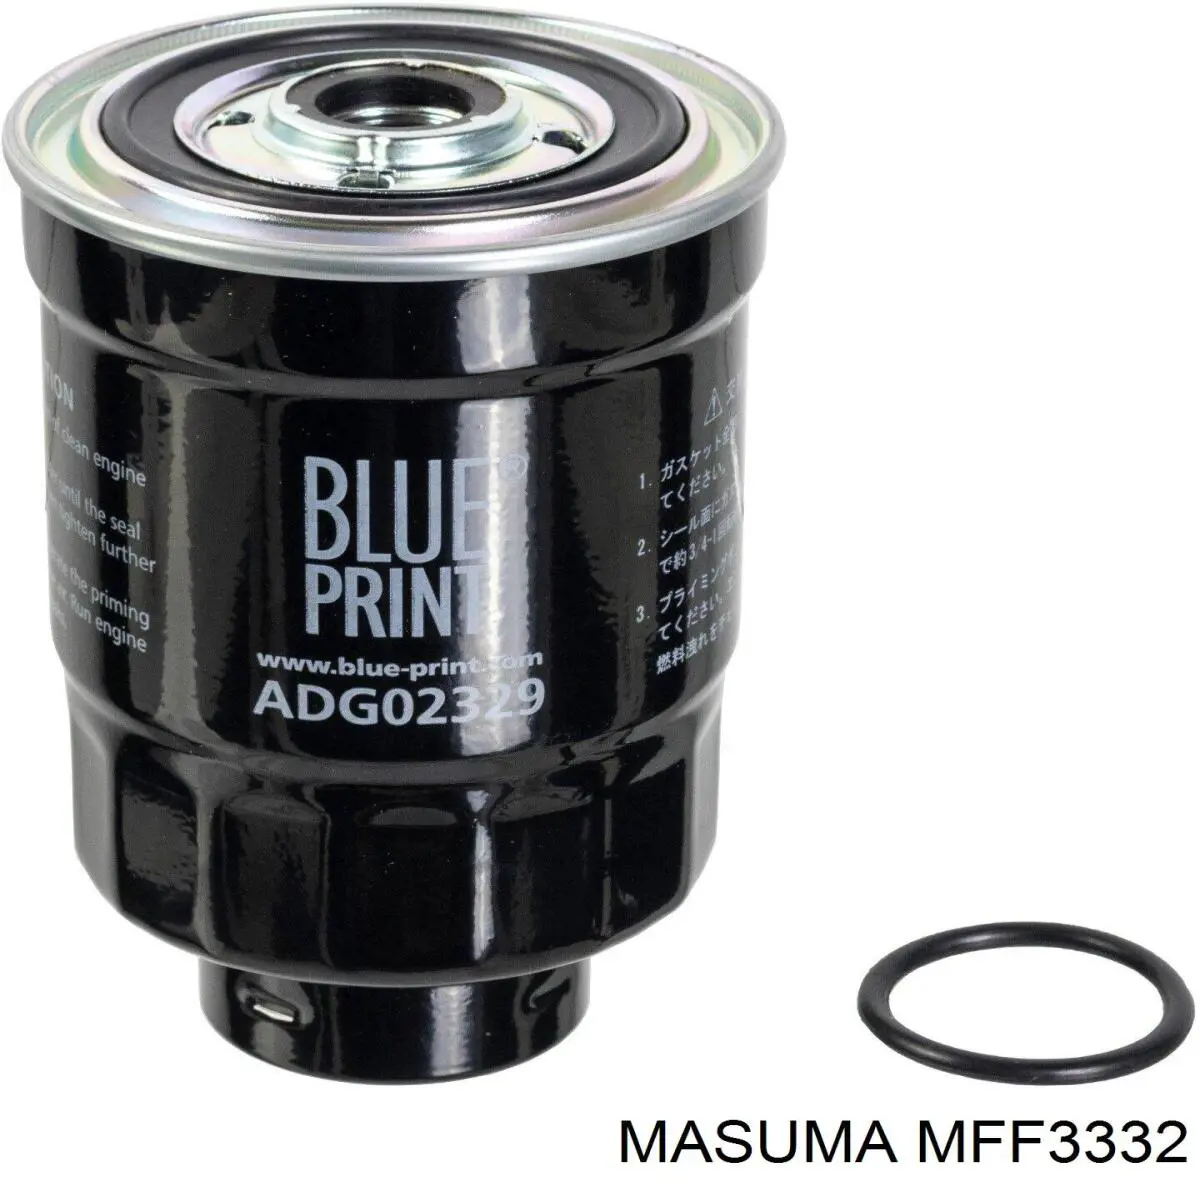 MFF3332 Masuma filtro combustible